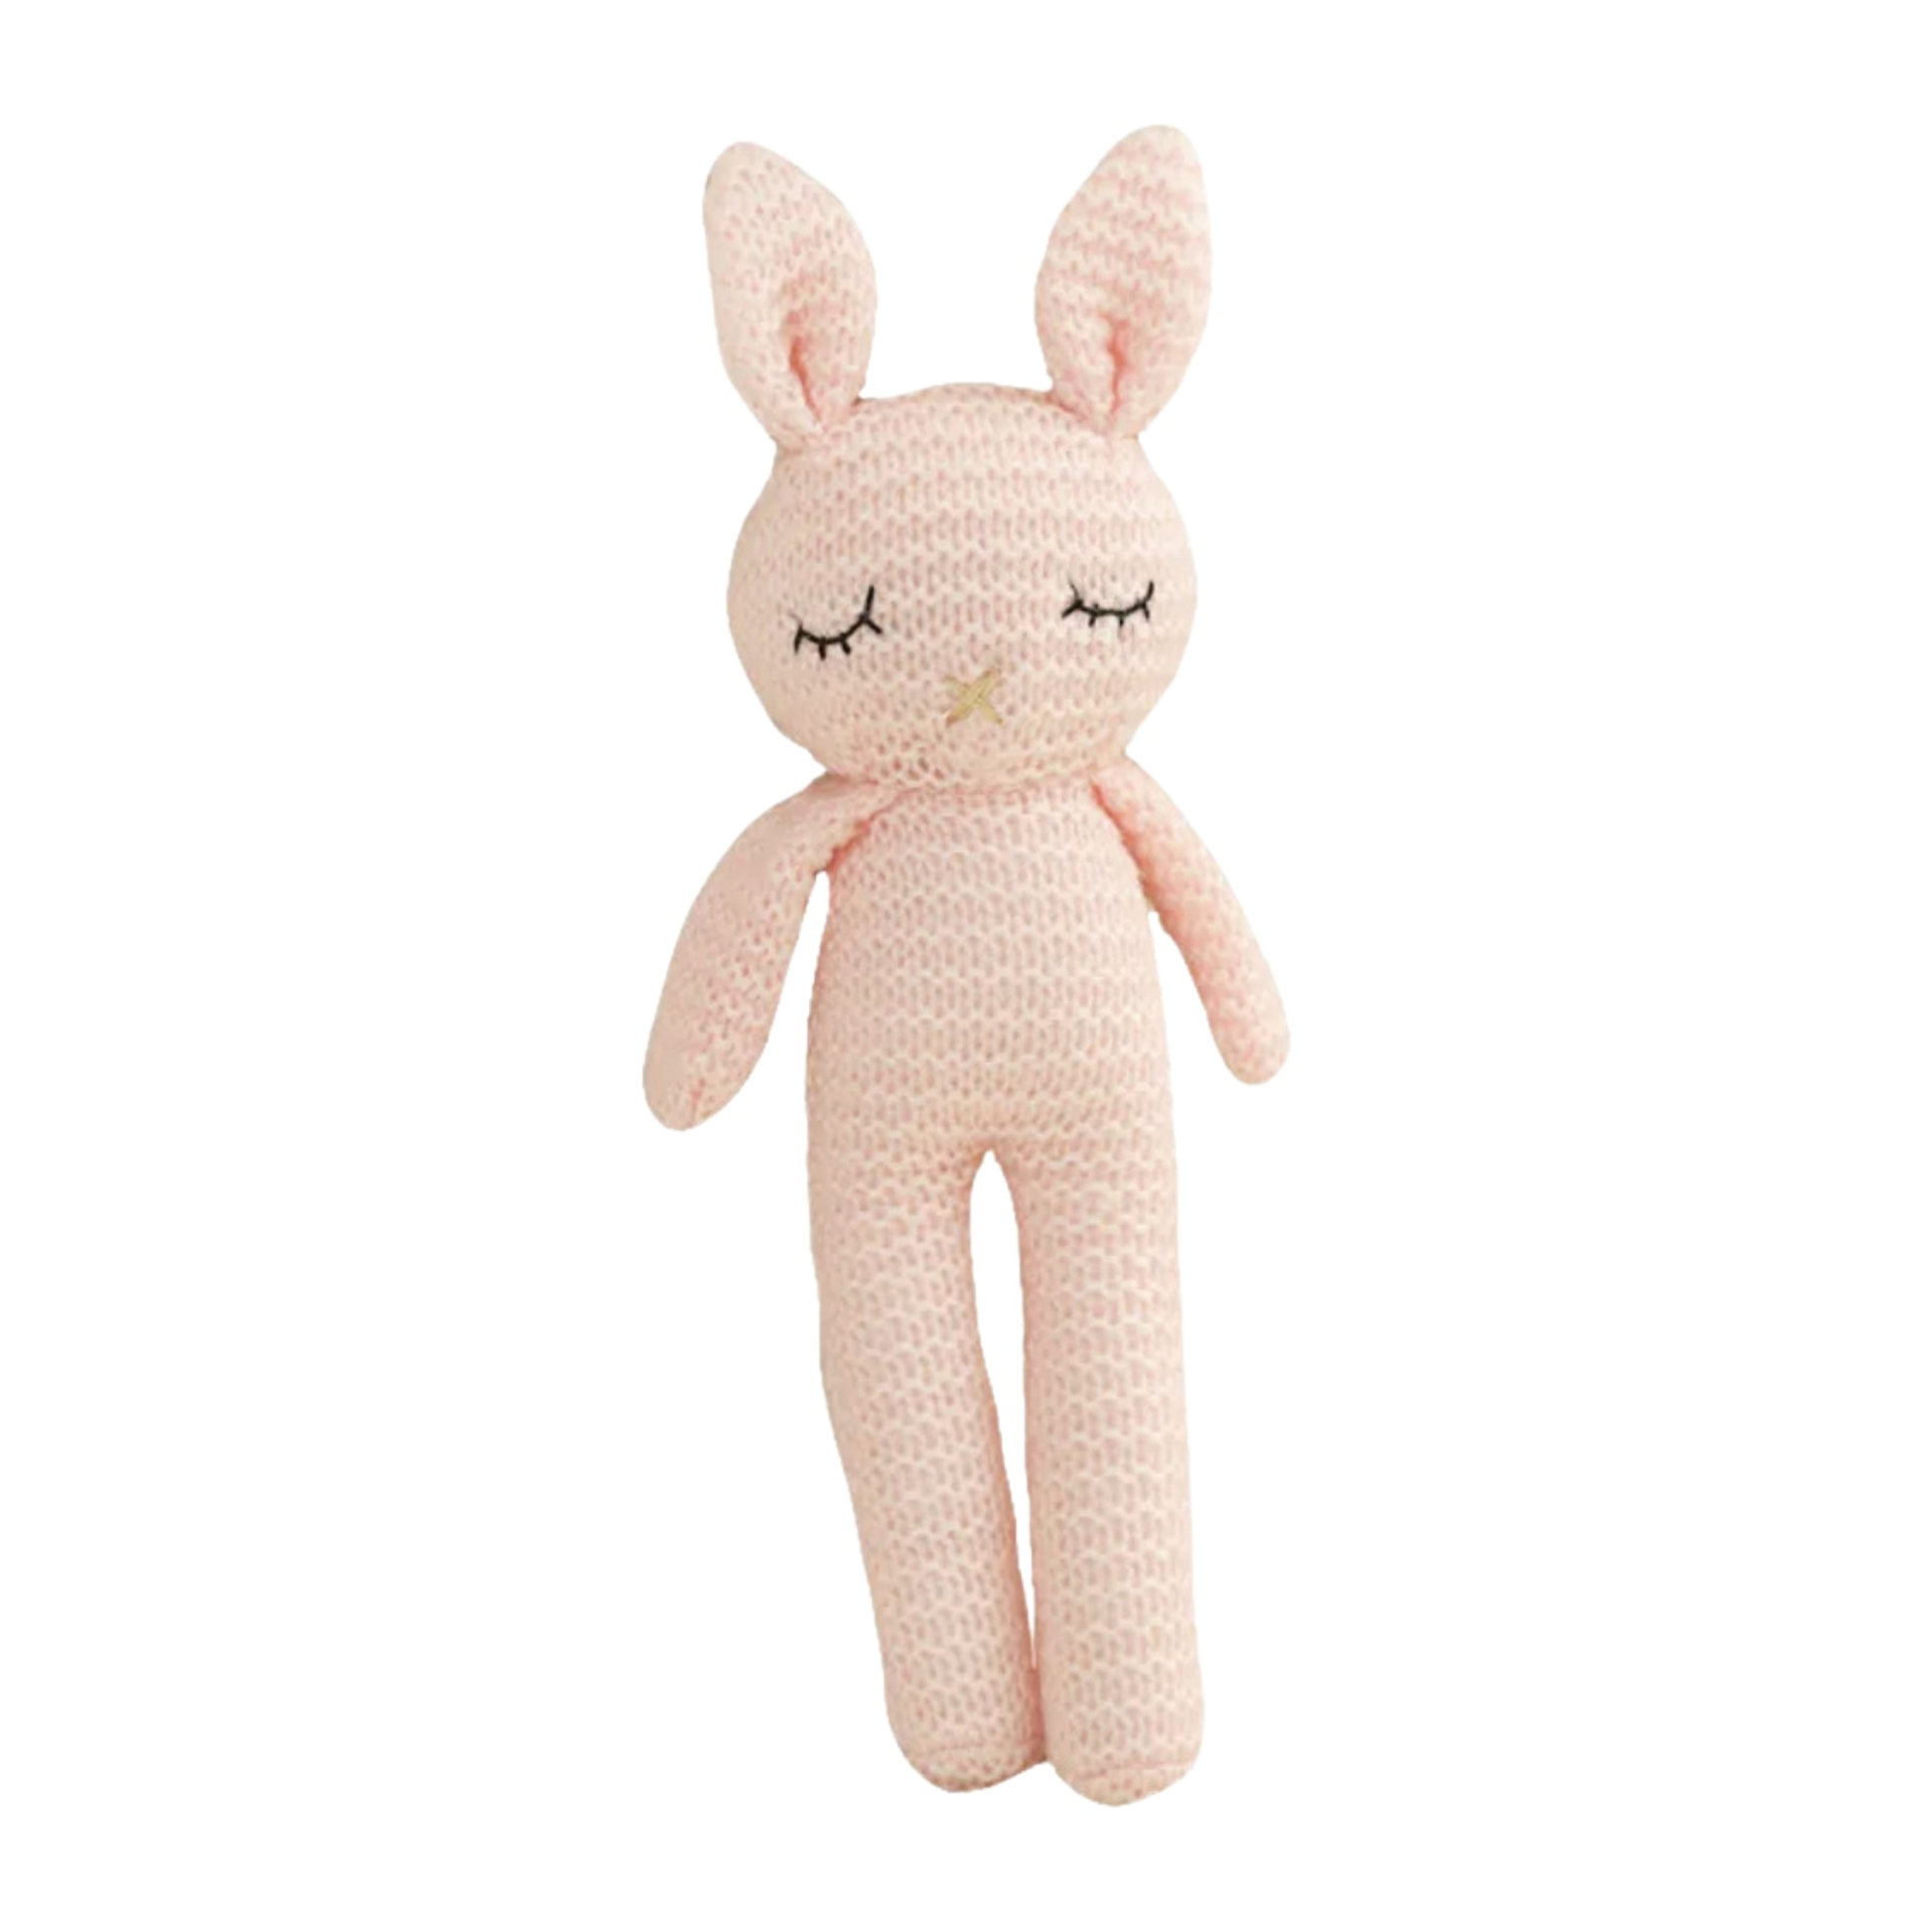 Baby toy - crochet bunny. Baby shower gift.